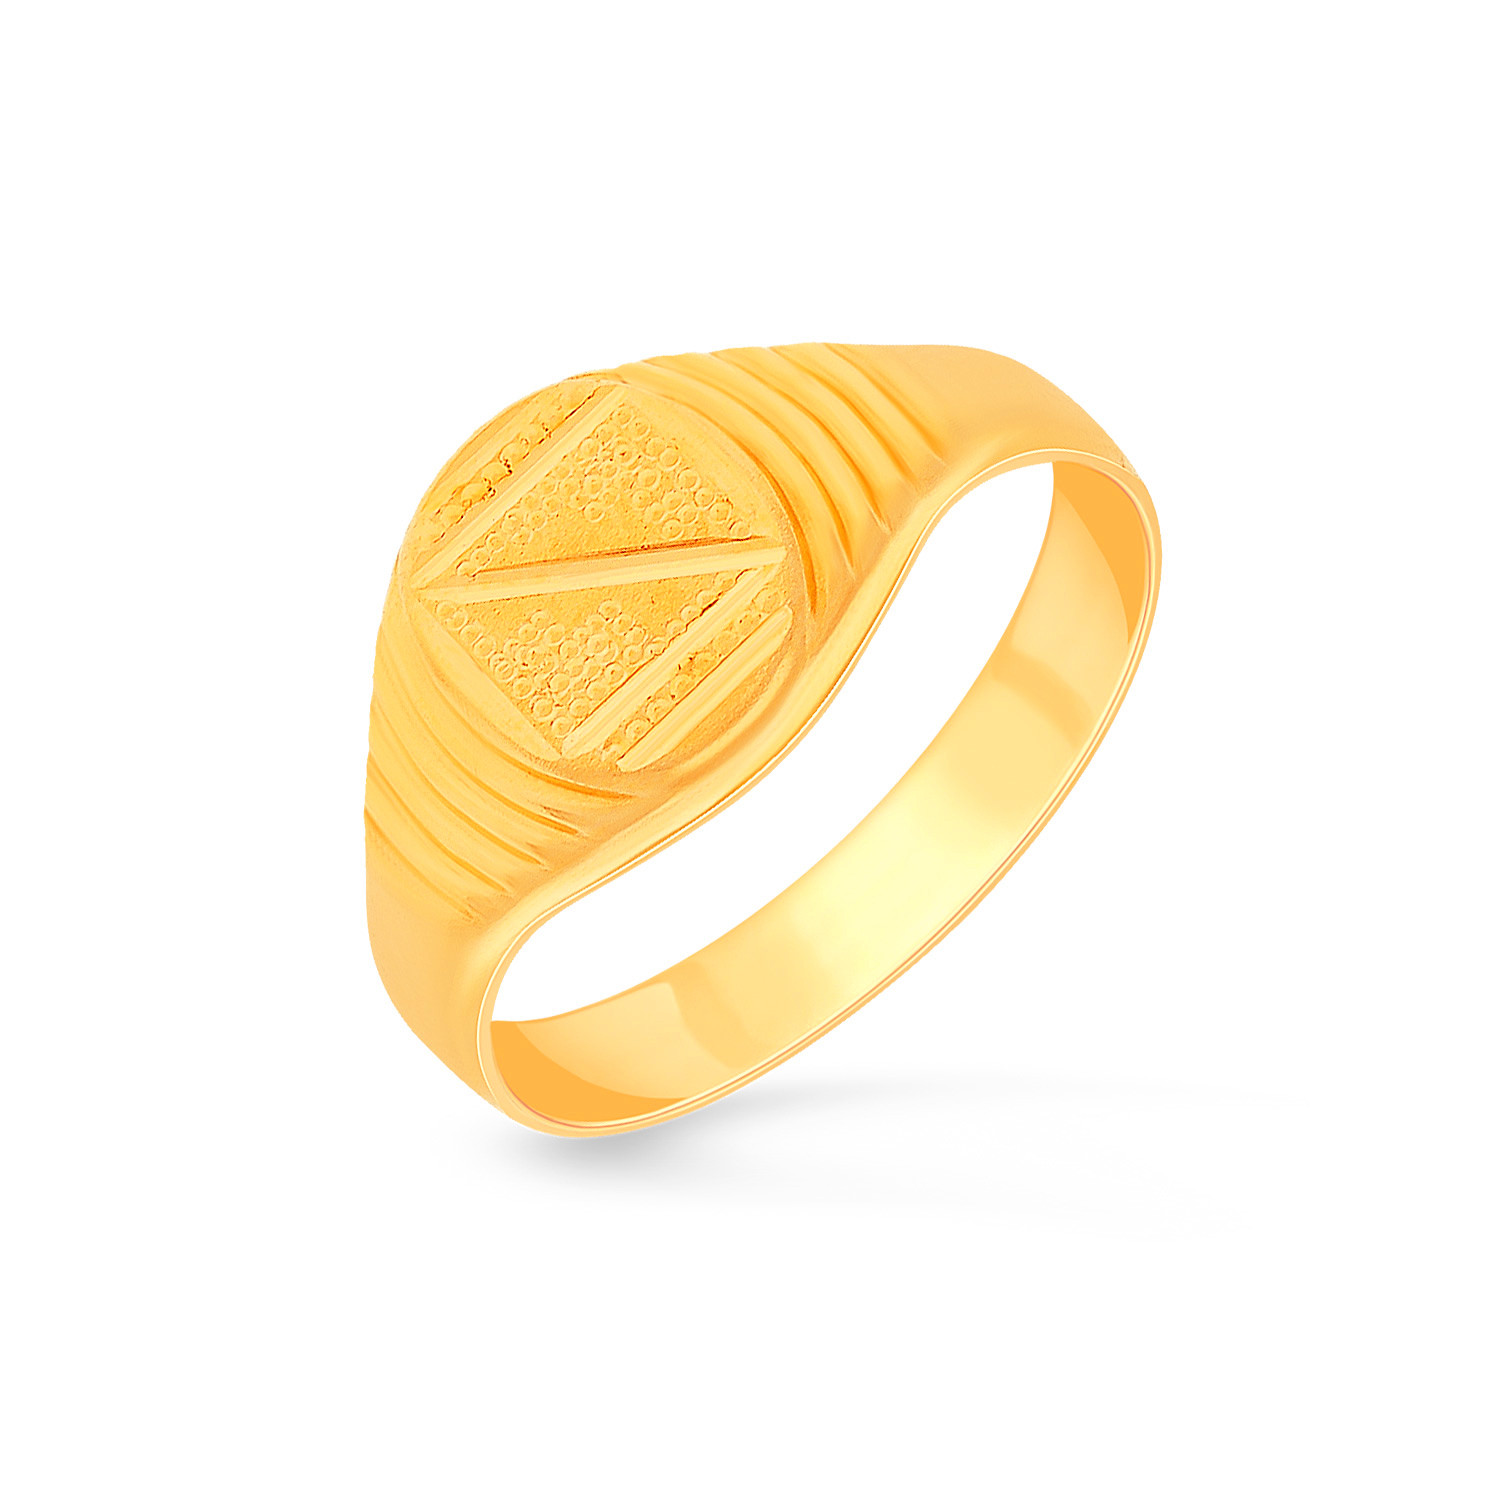 Gram gold polish rajputi style ring